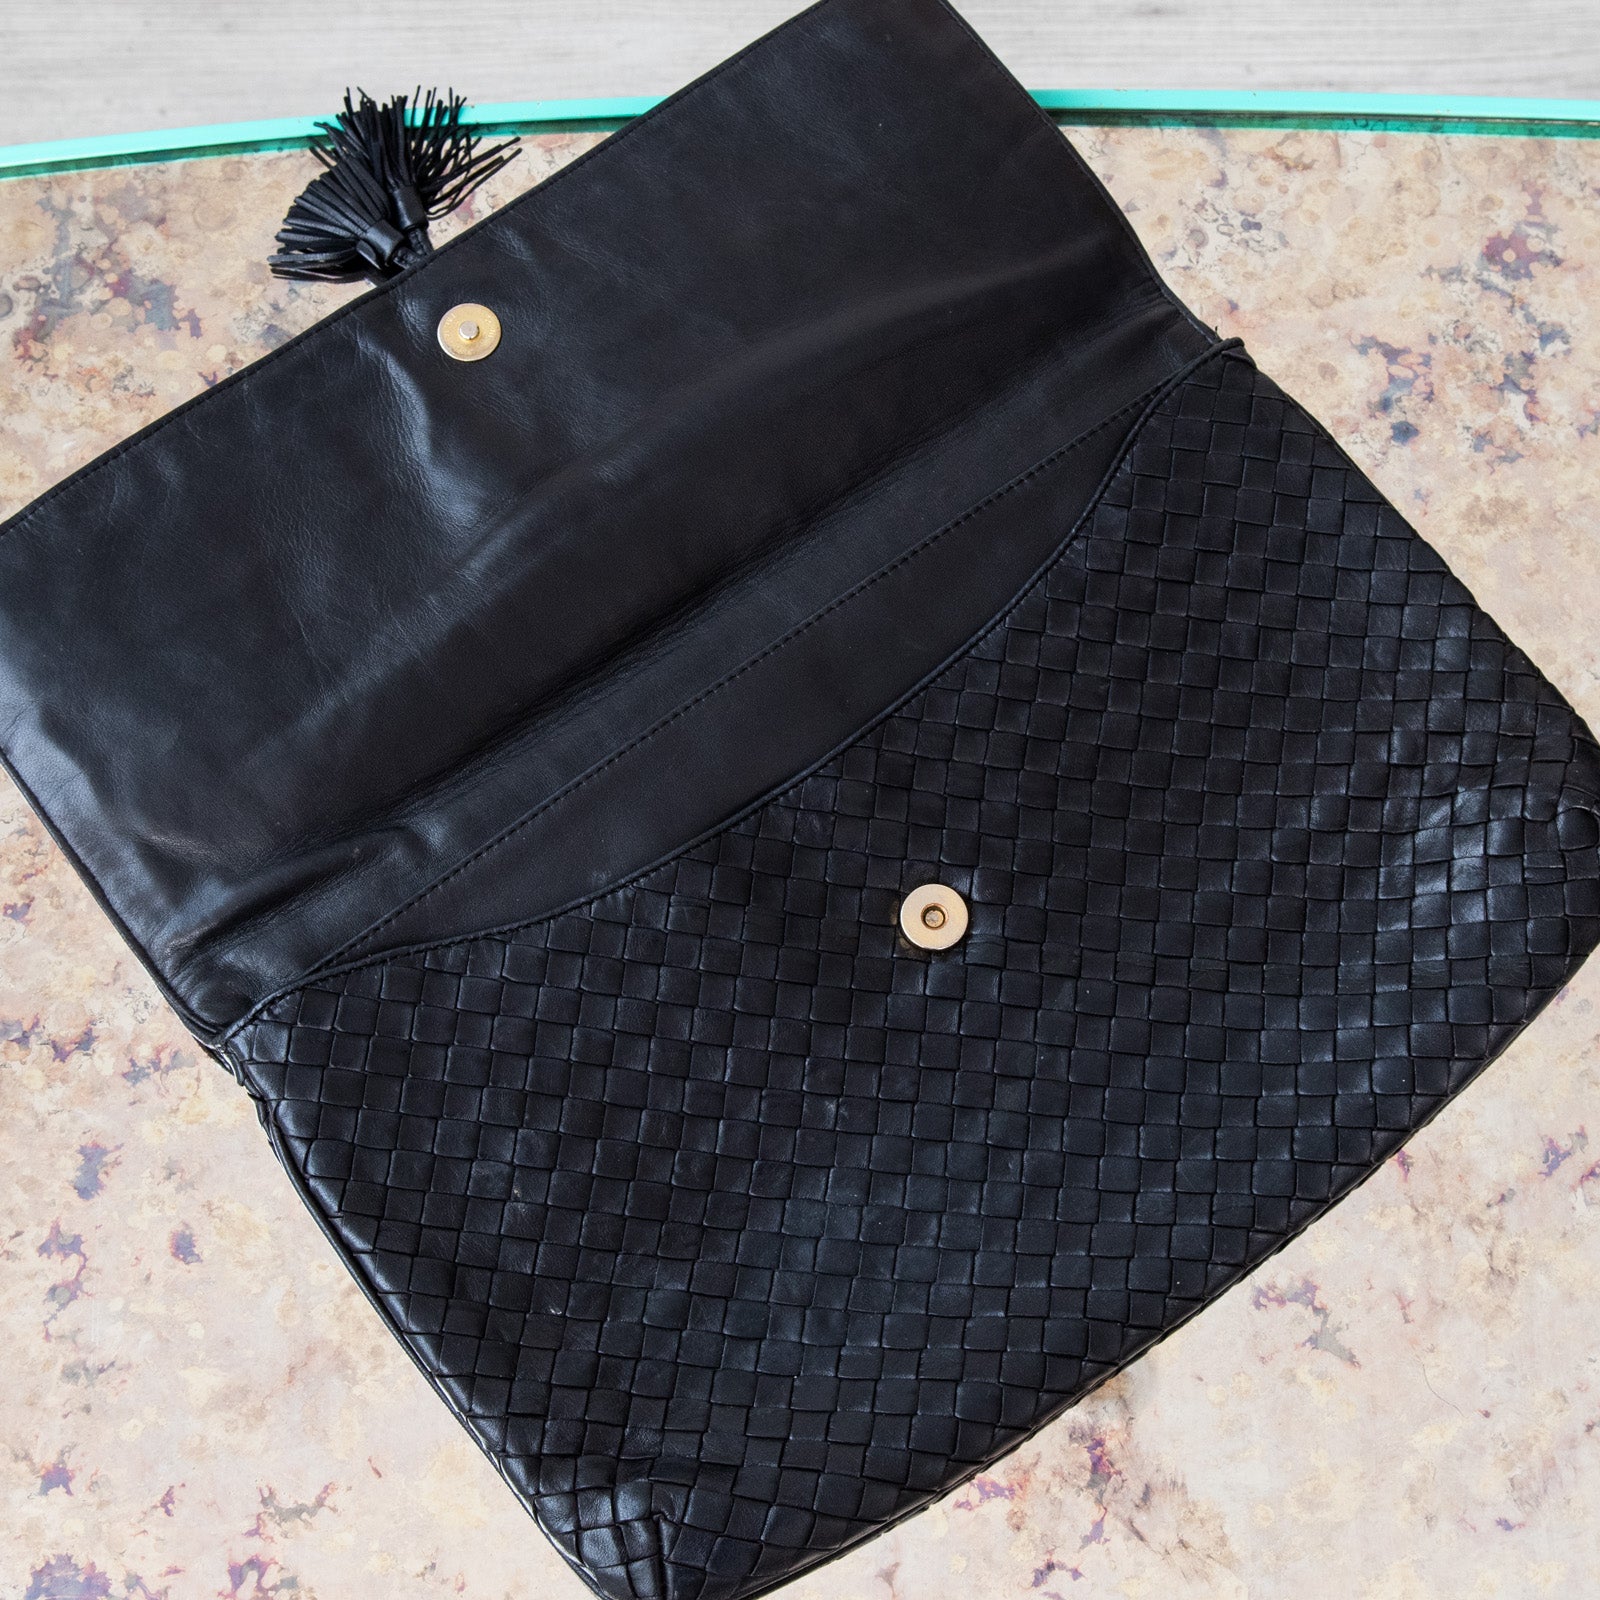 Bottega Veneta Black Leather Clutch Bag - Image 3 of 6